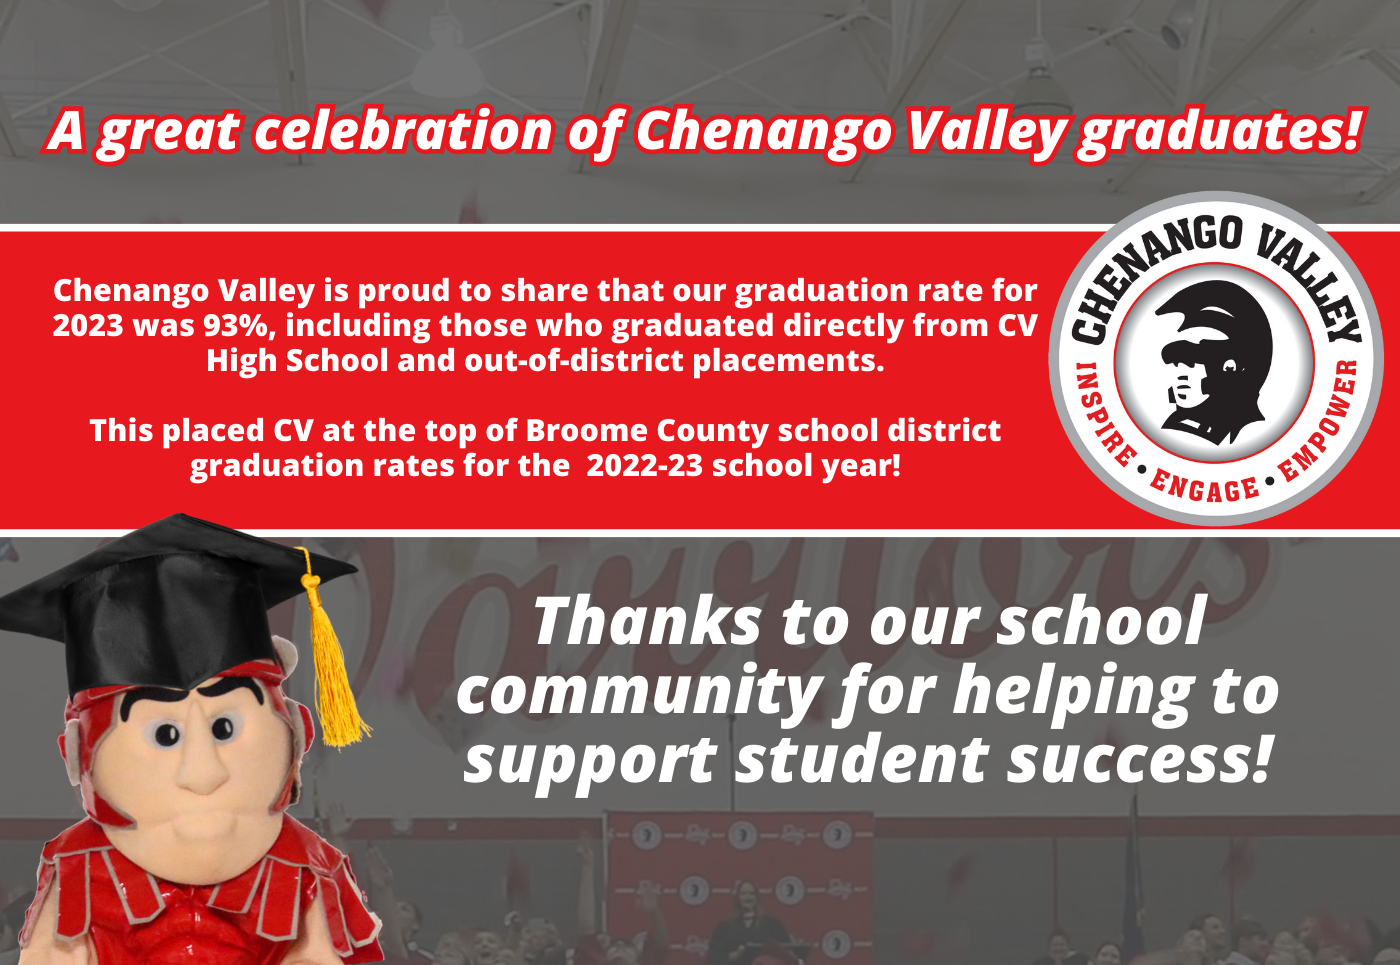 Chenango valley graduate celebration